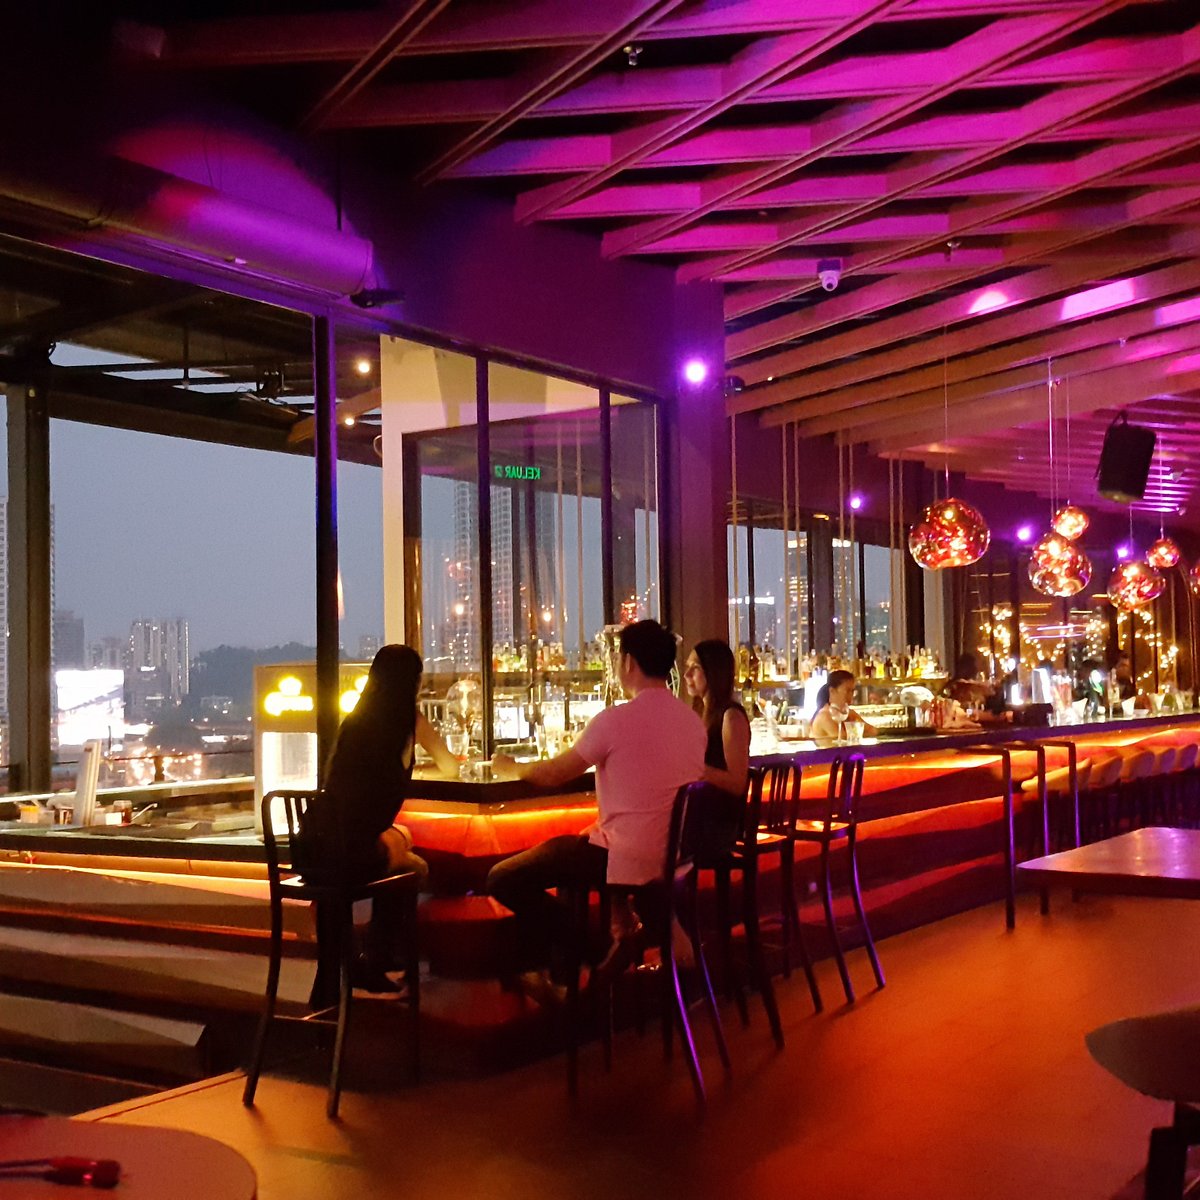 Mantra rooftop bar and lounge menu